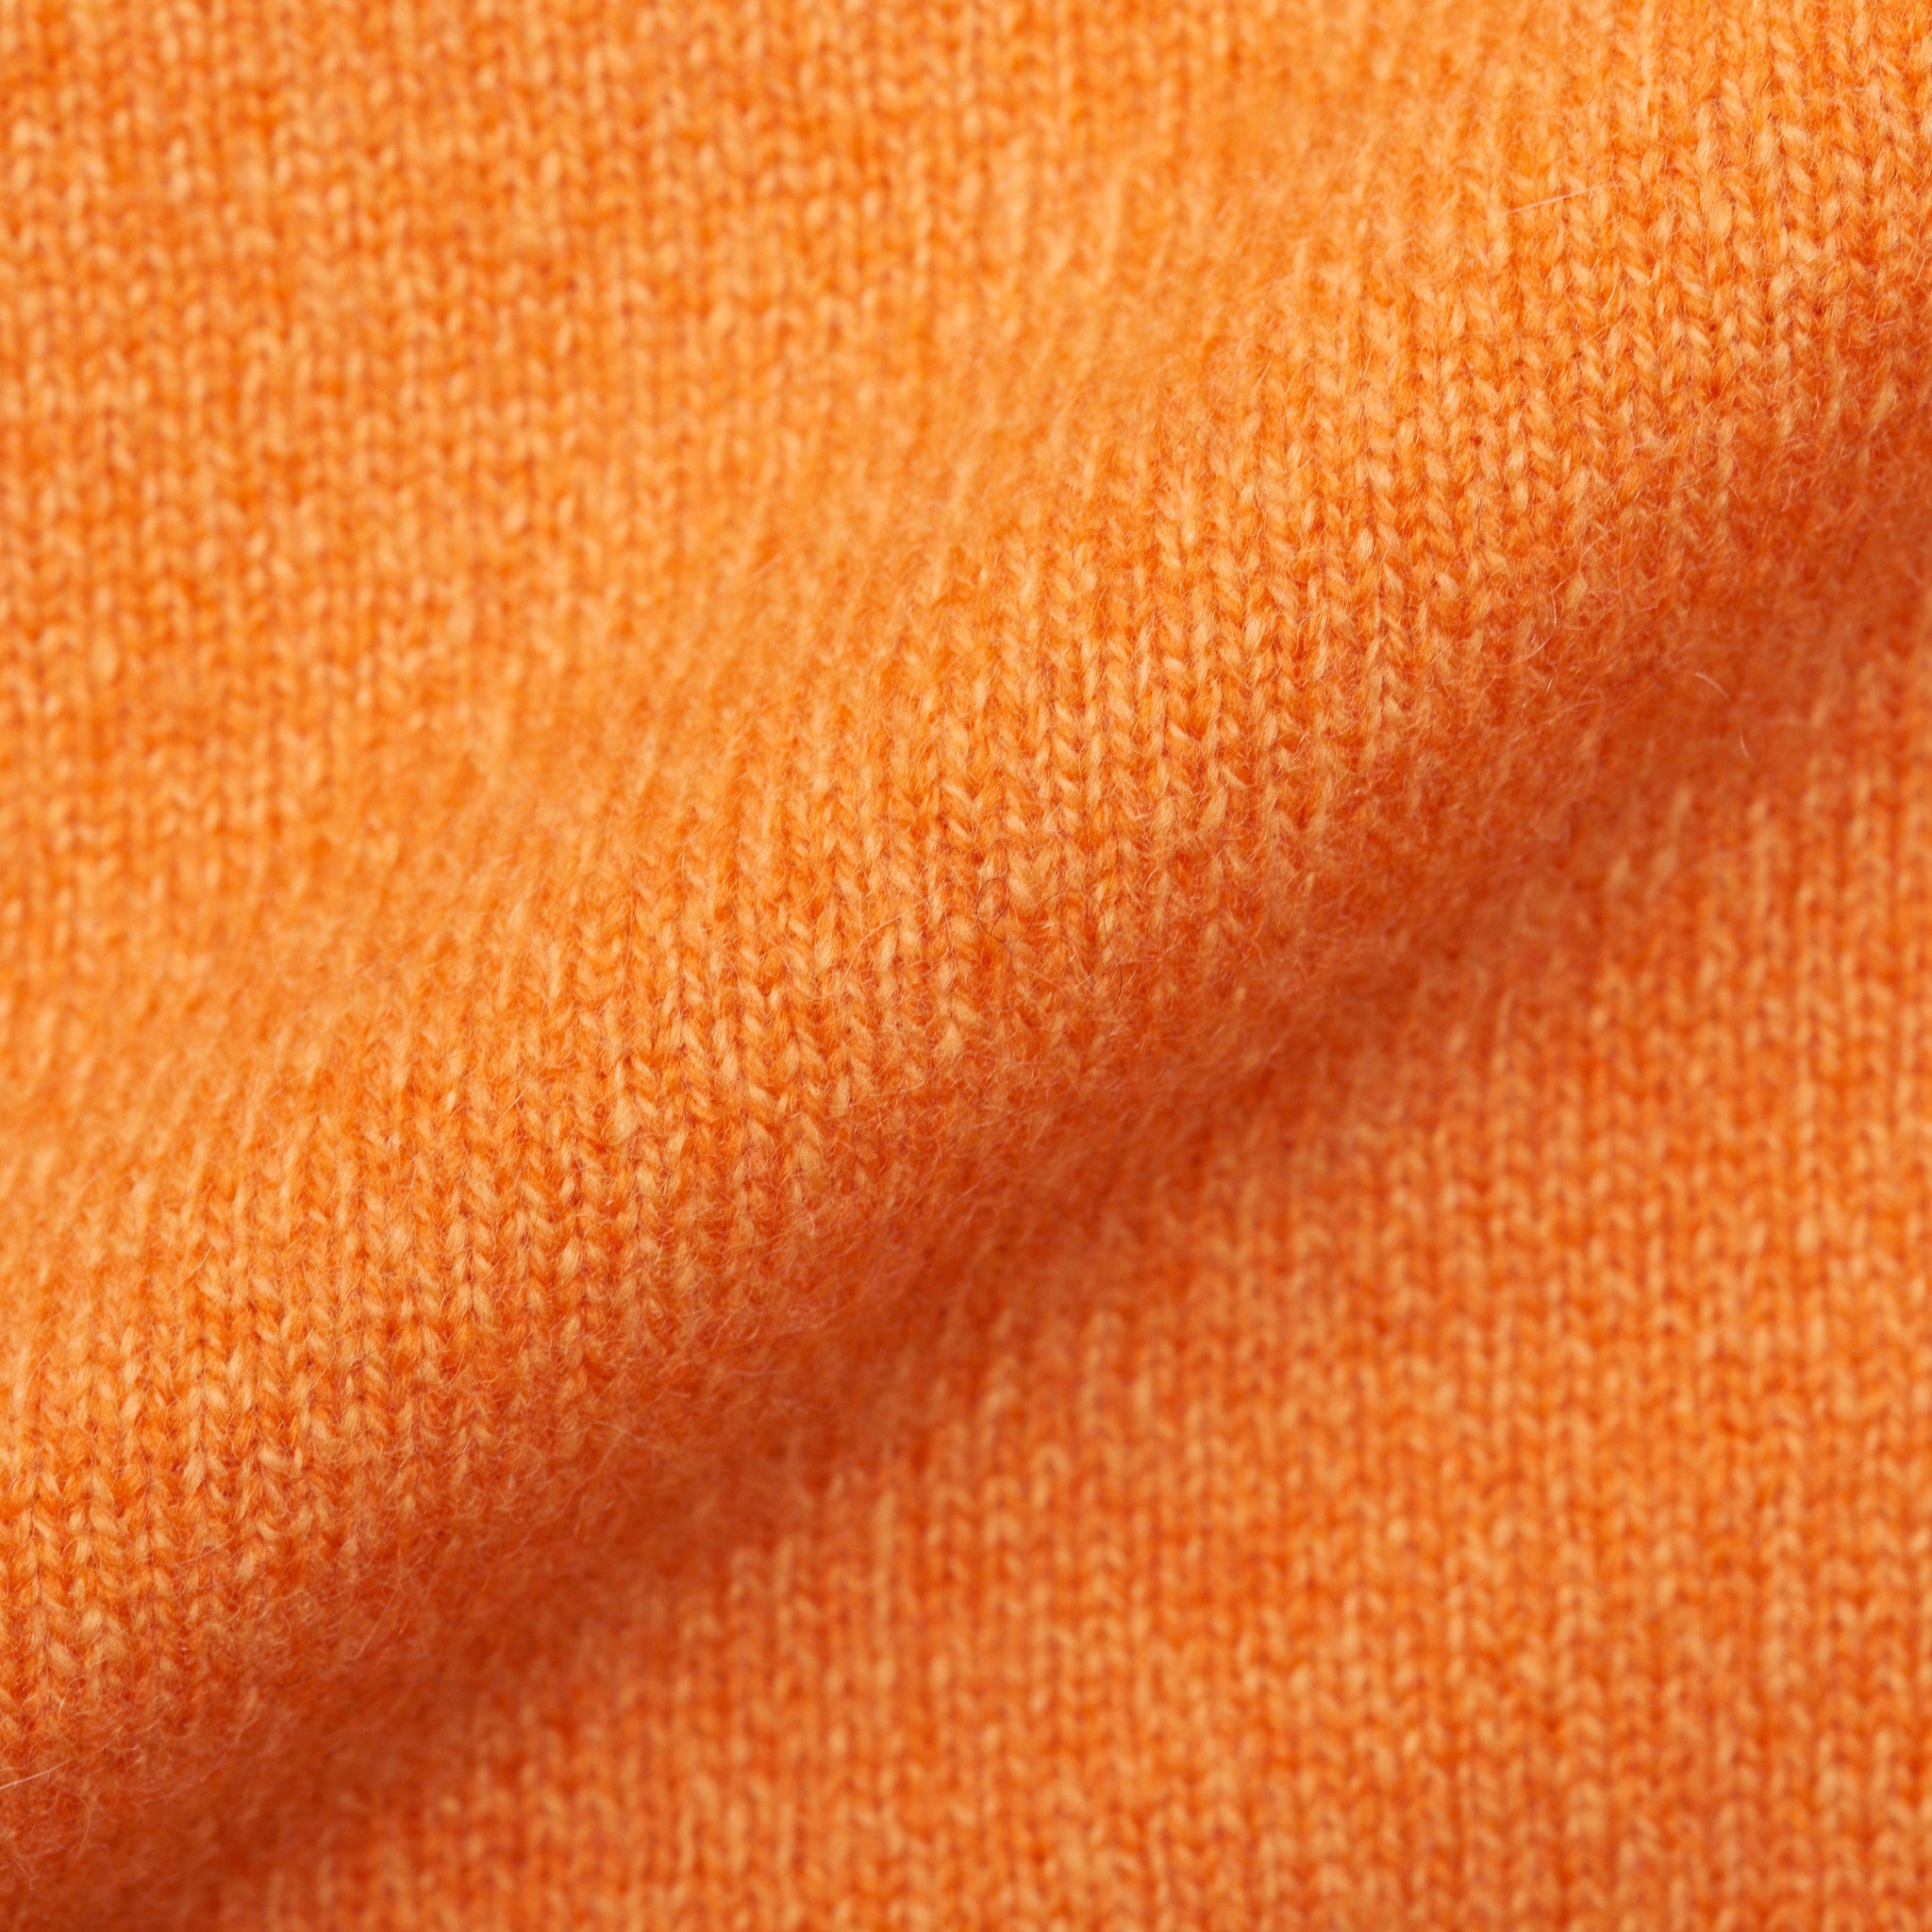 FEDELI Orange Cashmere Raglan Sleeves Crewneck Sweater EU 56 NEW US XXL FEDELI